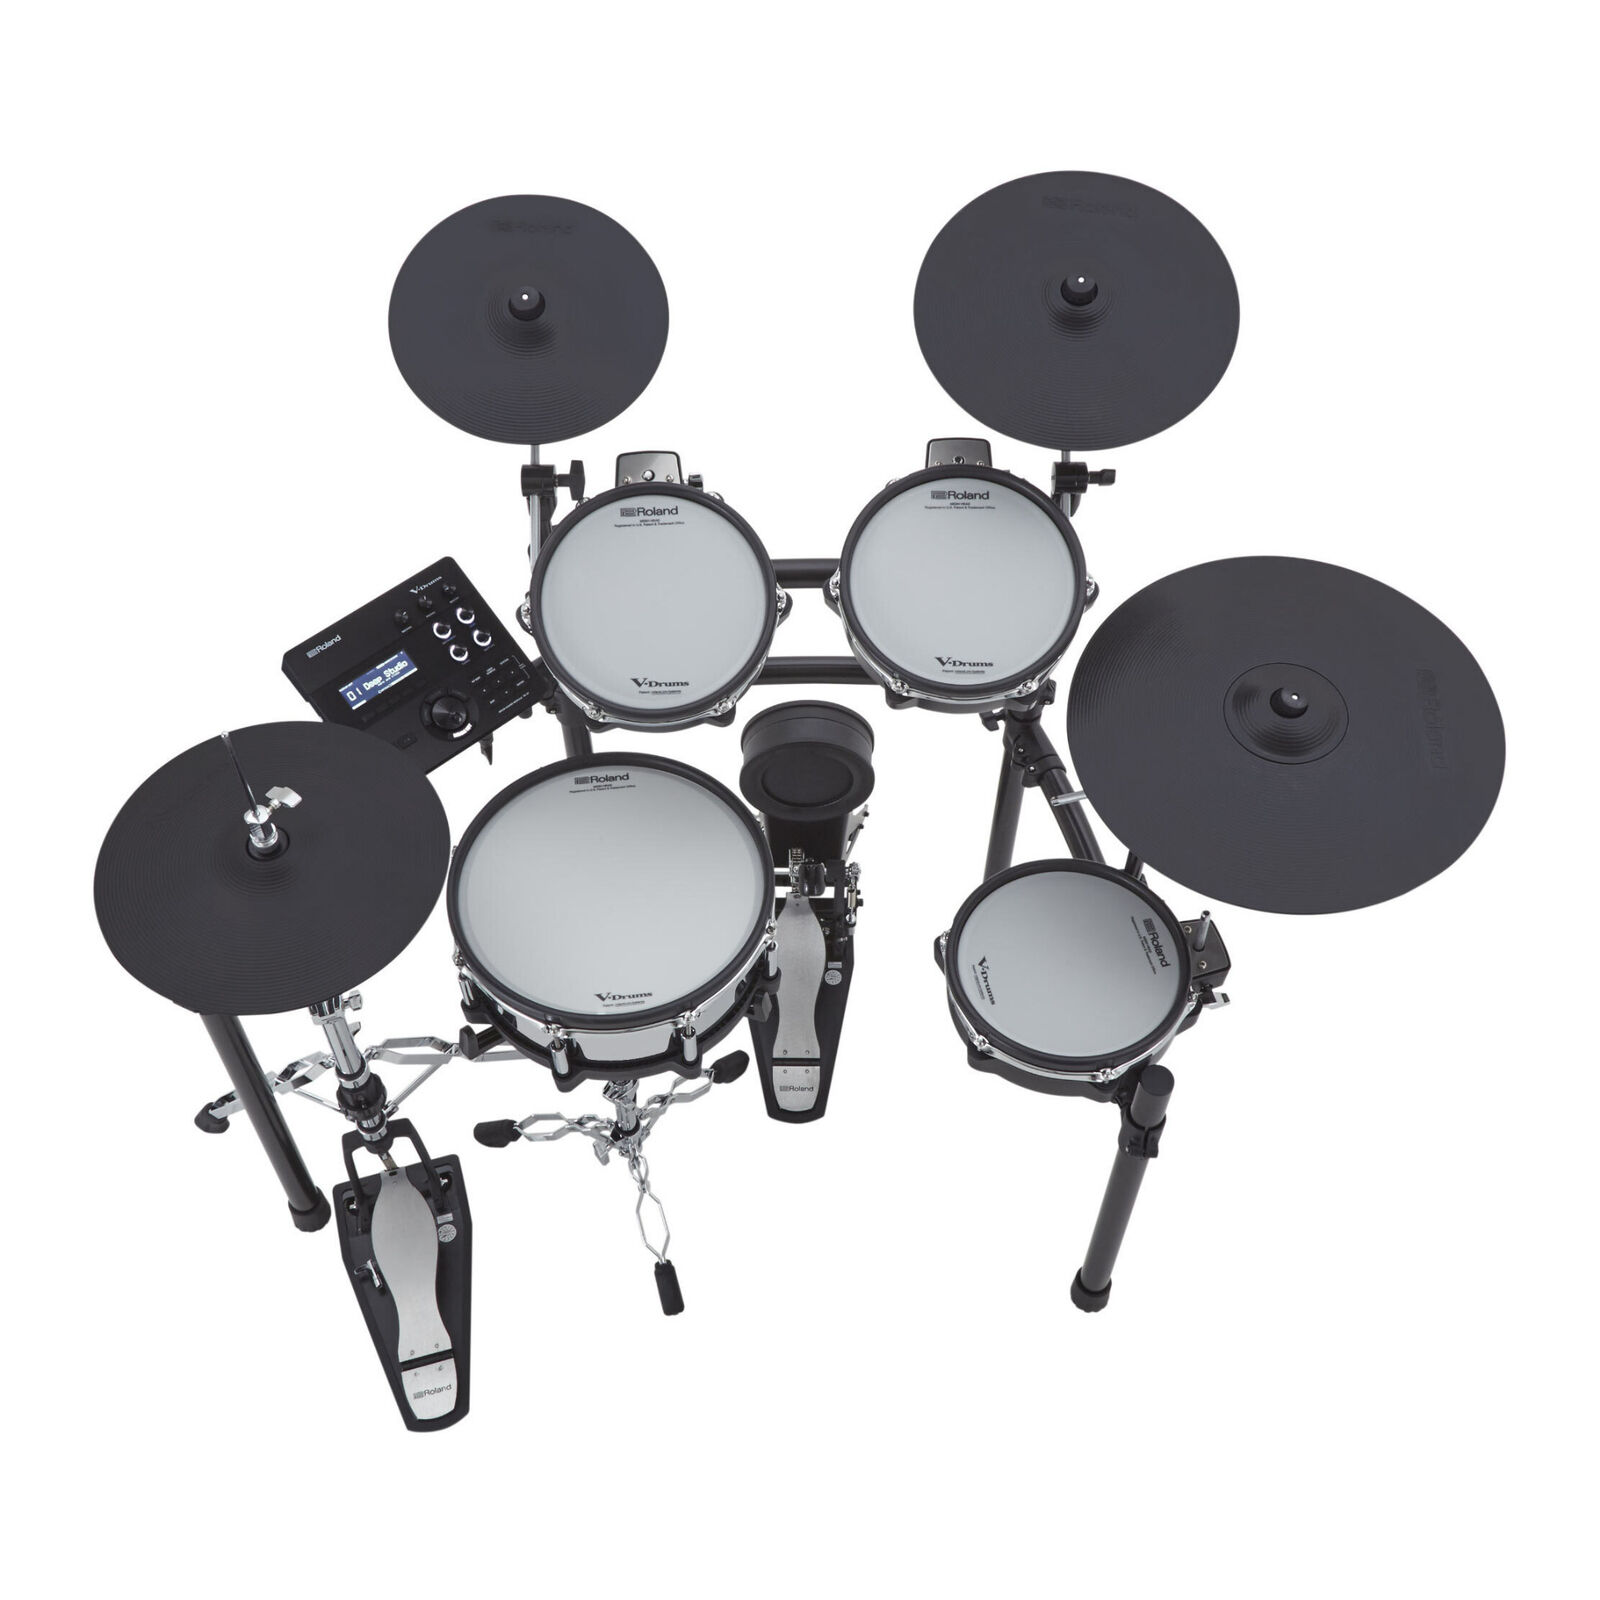 Roland TD-27KV2 Generation 2 V-Drum Electronic Drum Kit with 75 Presets 1